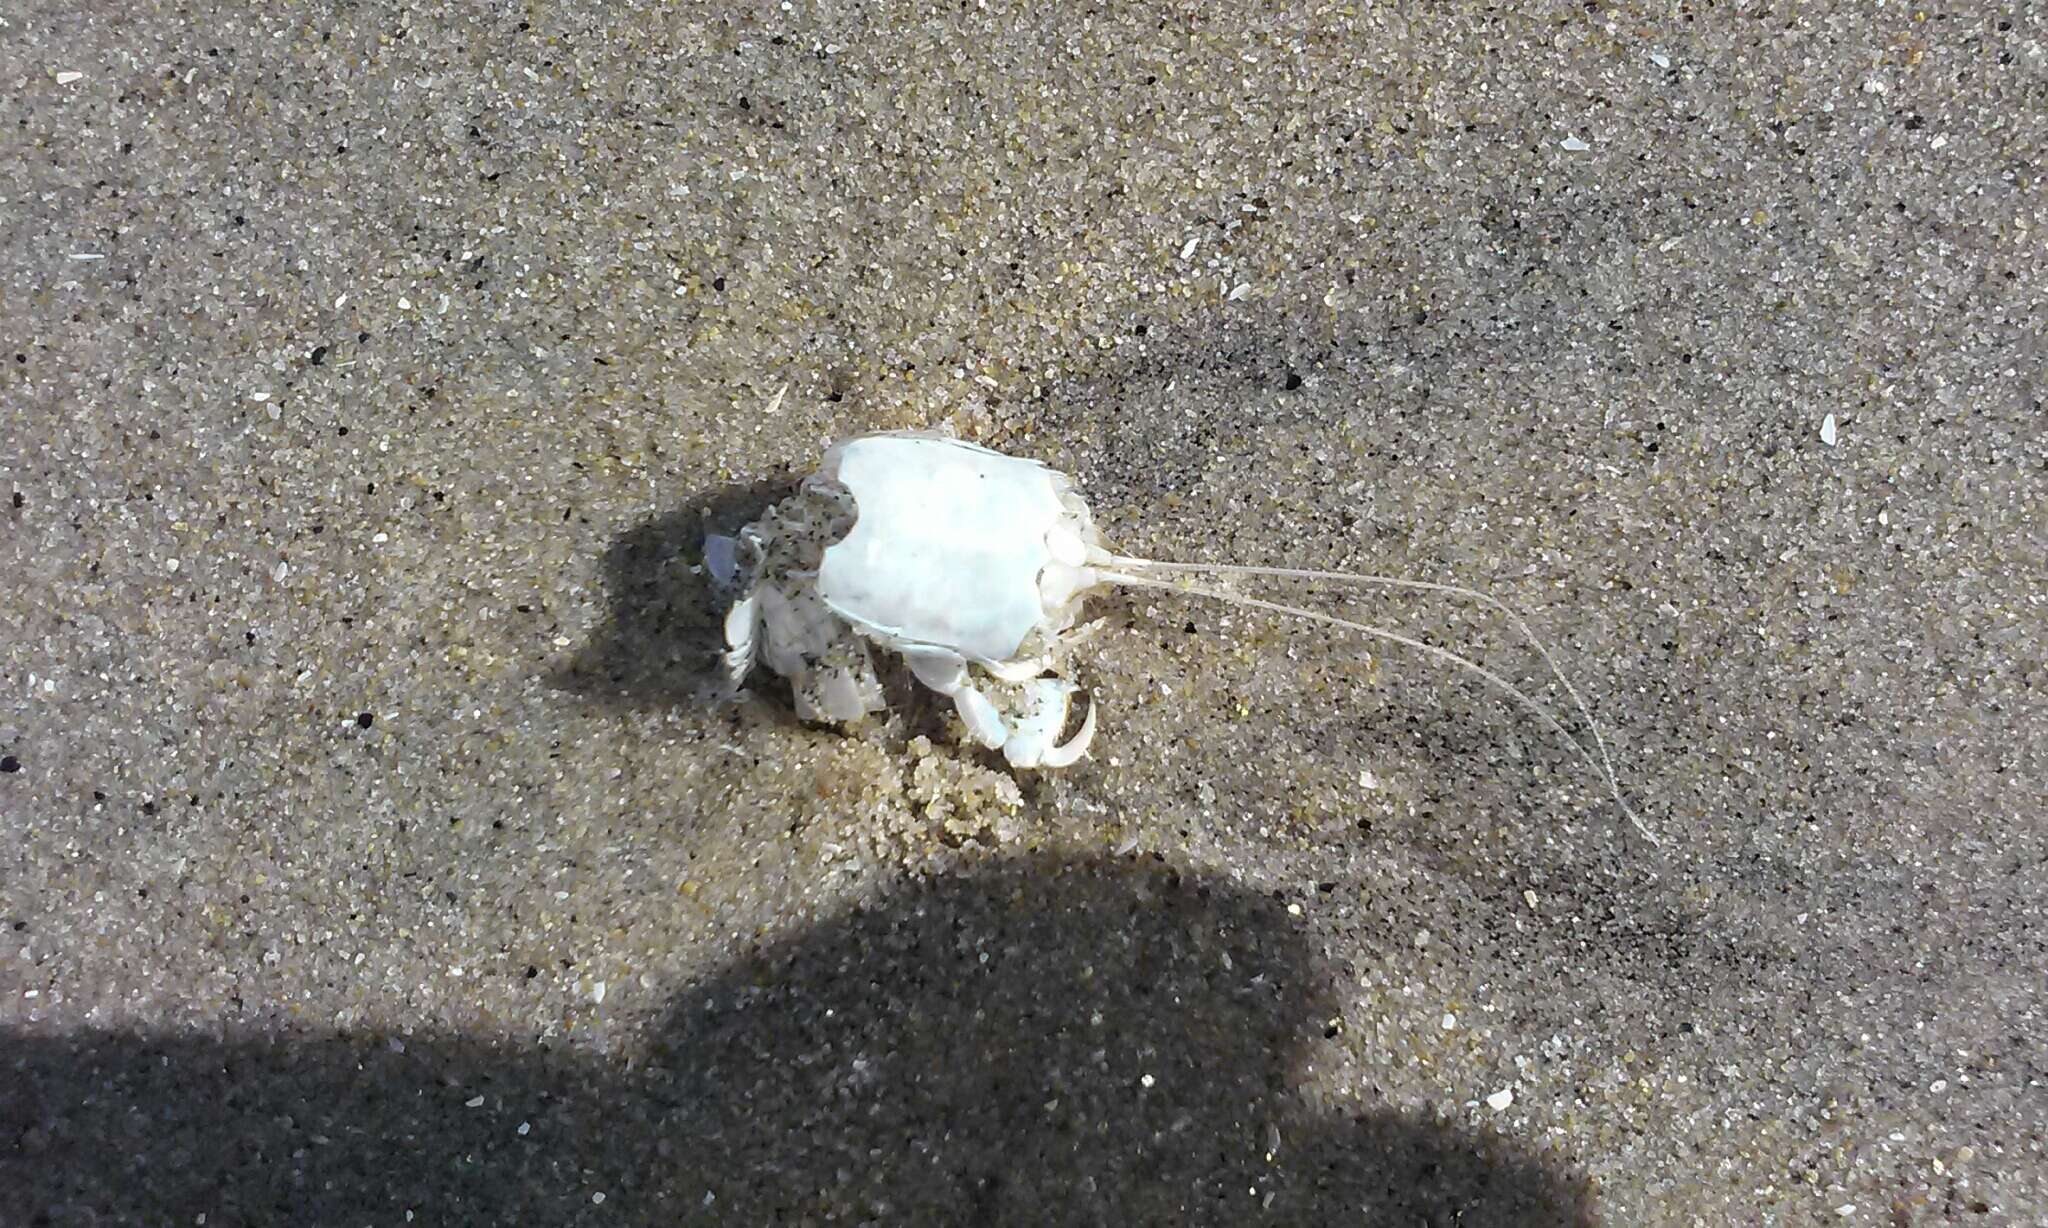 Image of California mole crab